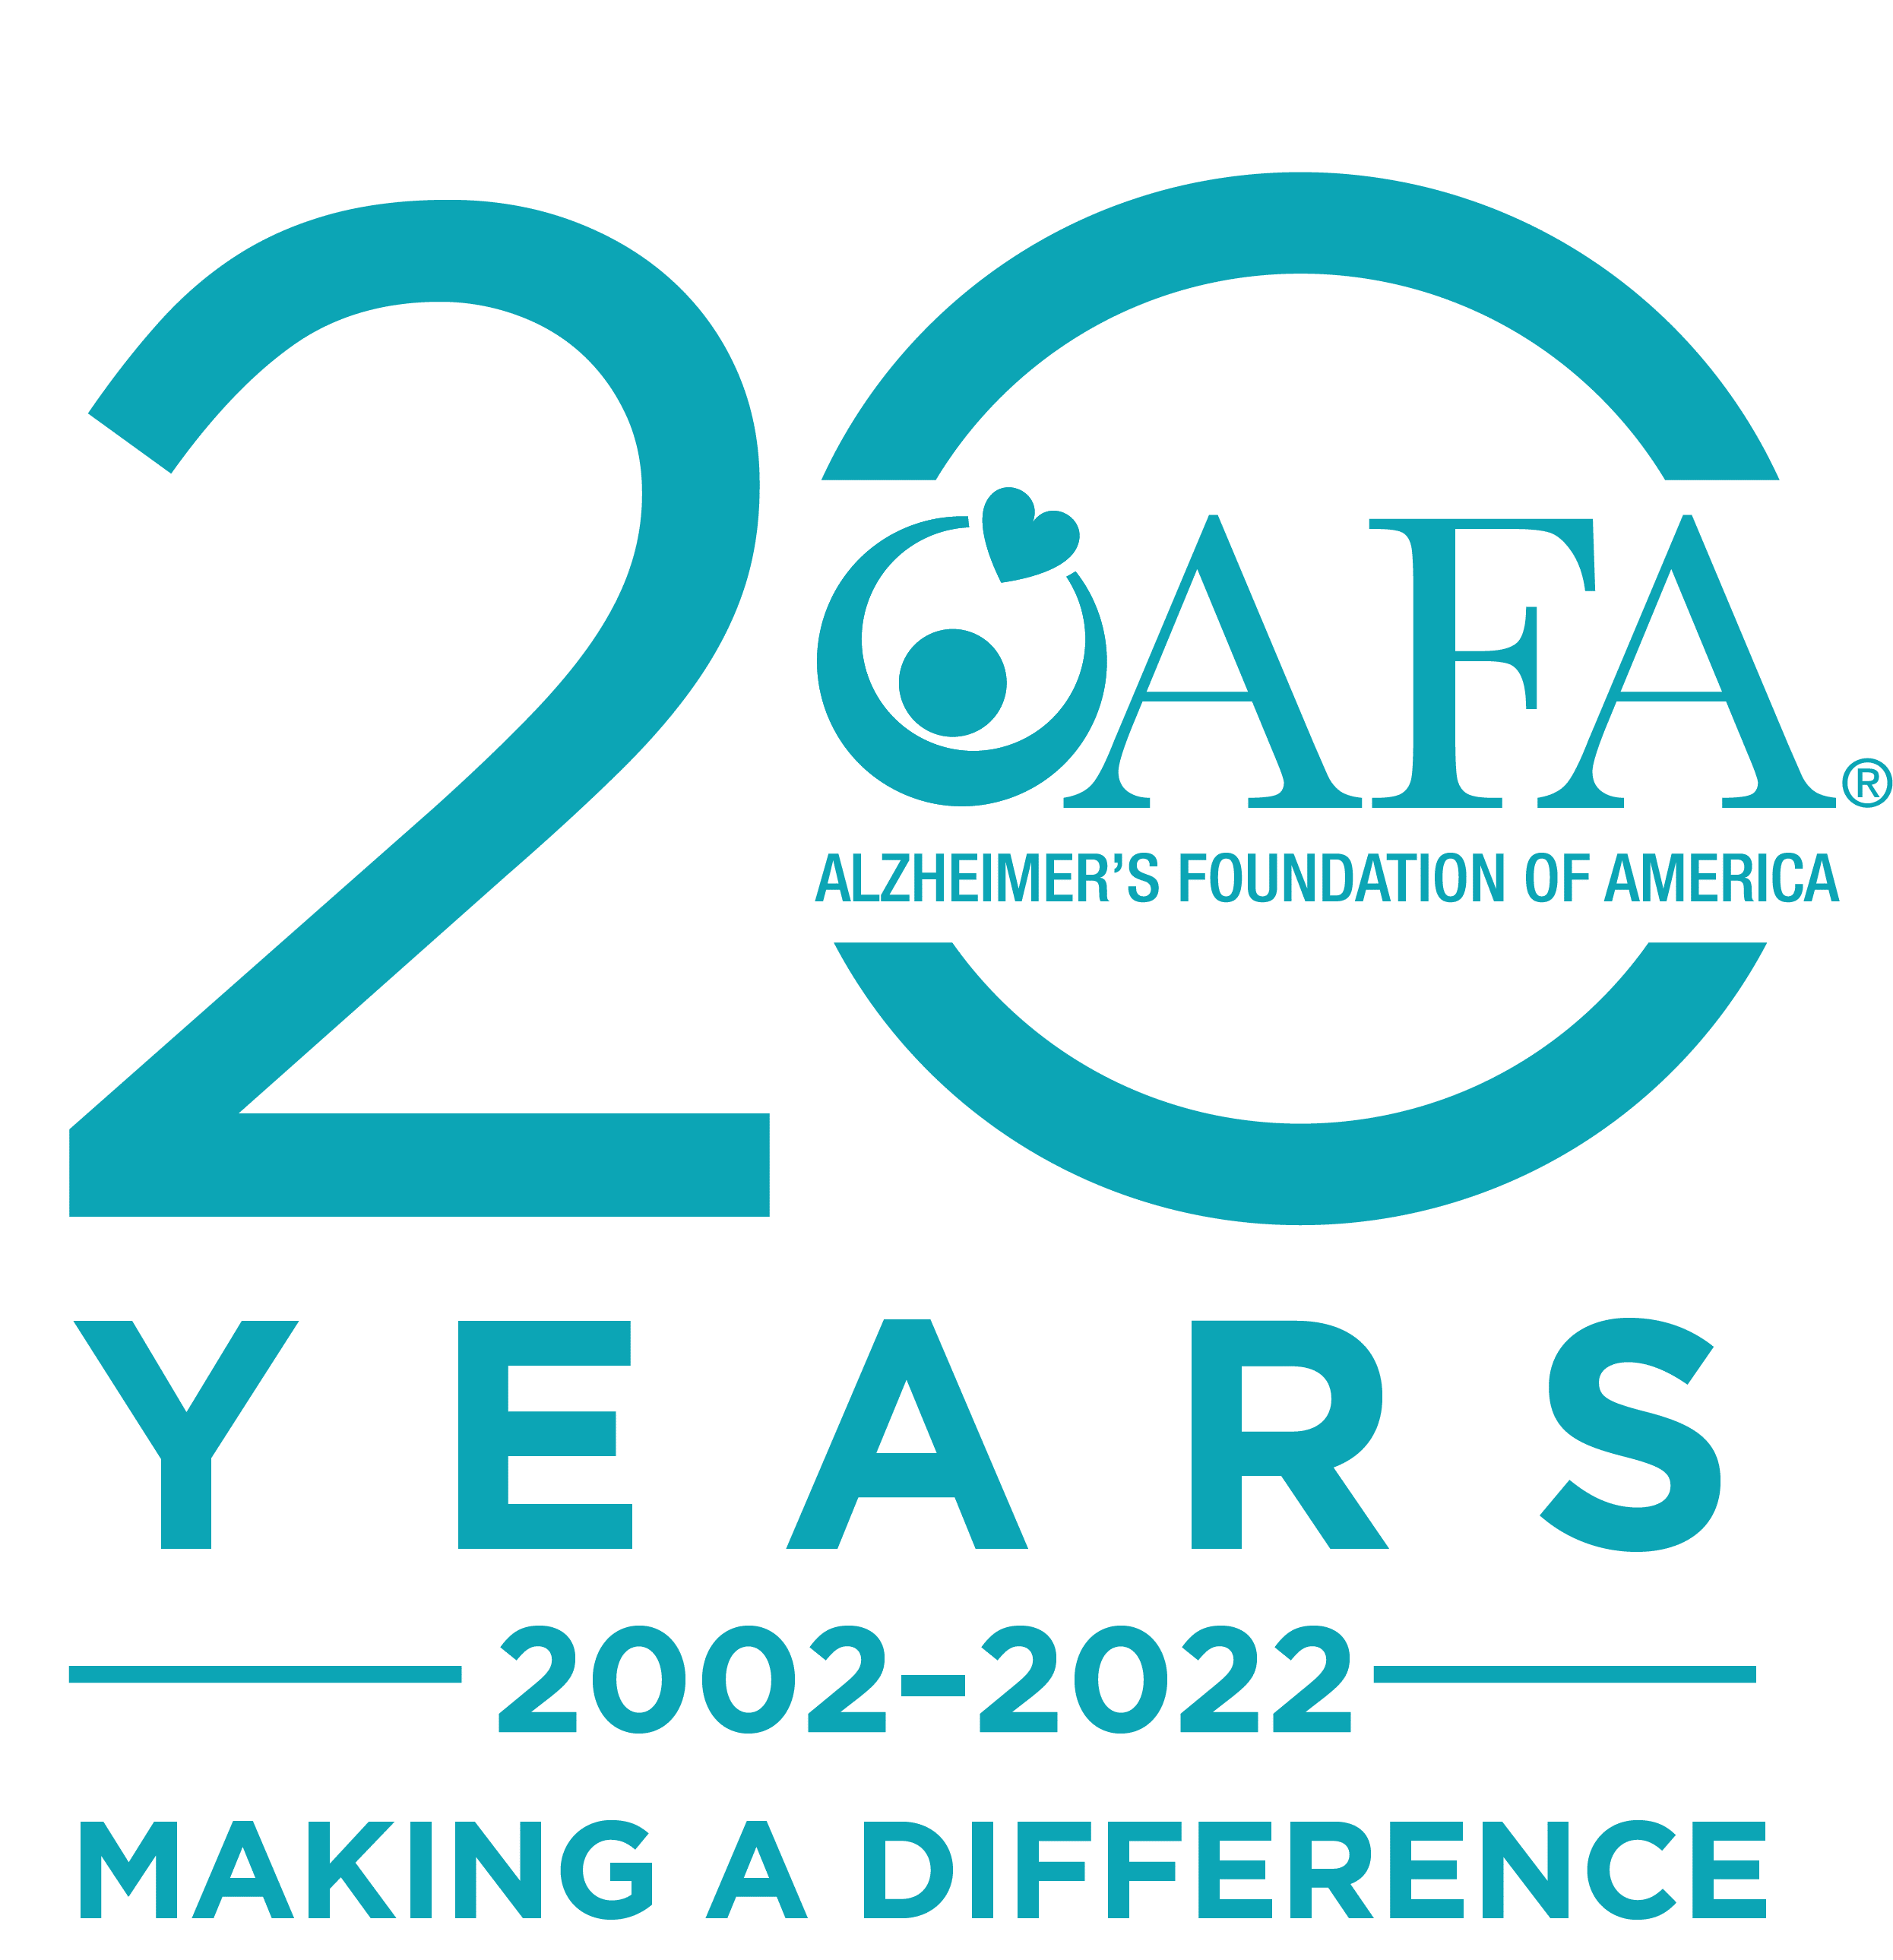 Alzheimer's Foundation of America 20 Years logo.